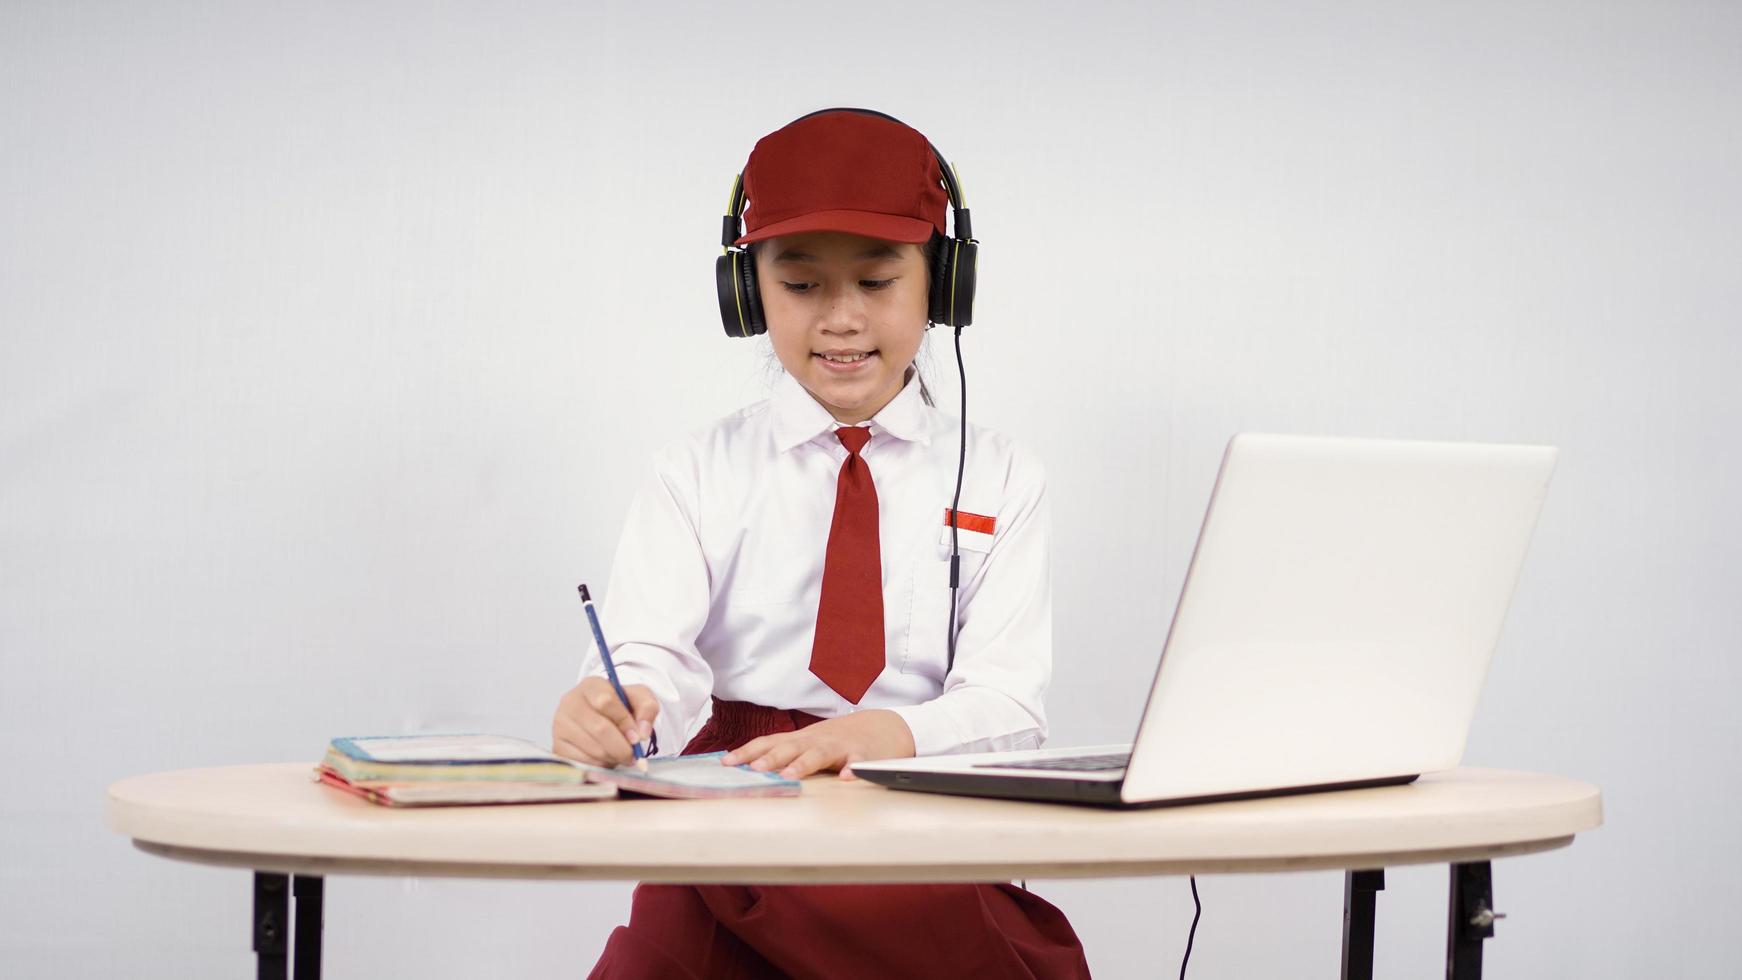 Elementary school asian girl listening on headphones while writing isolated on white background photo